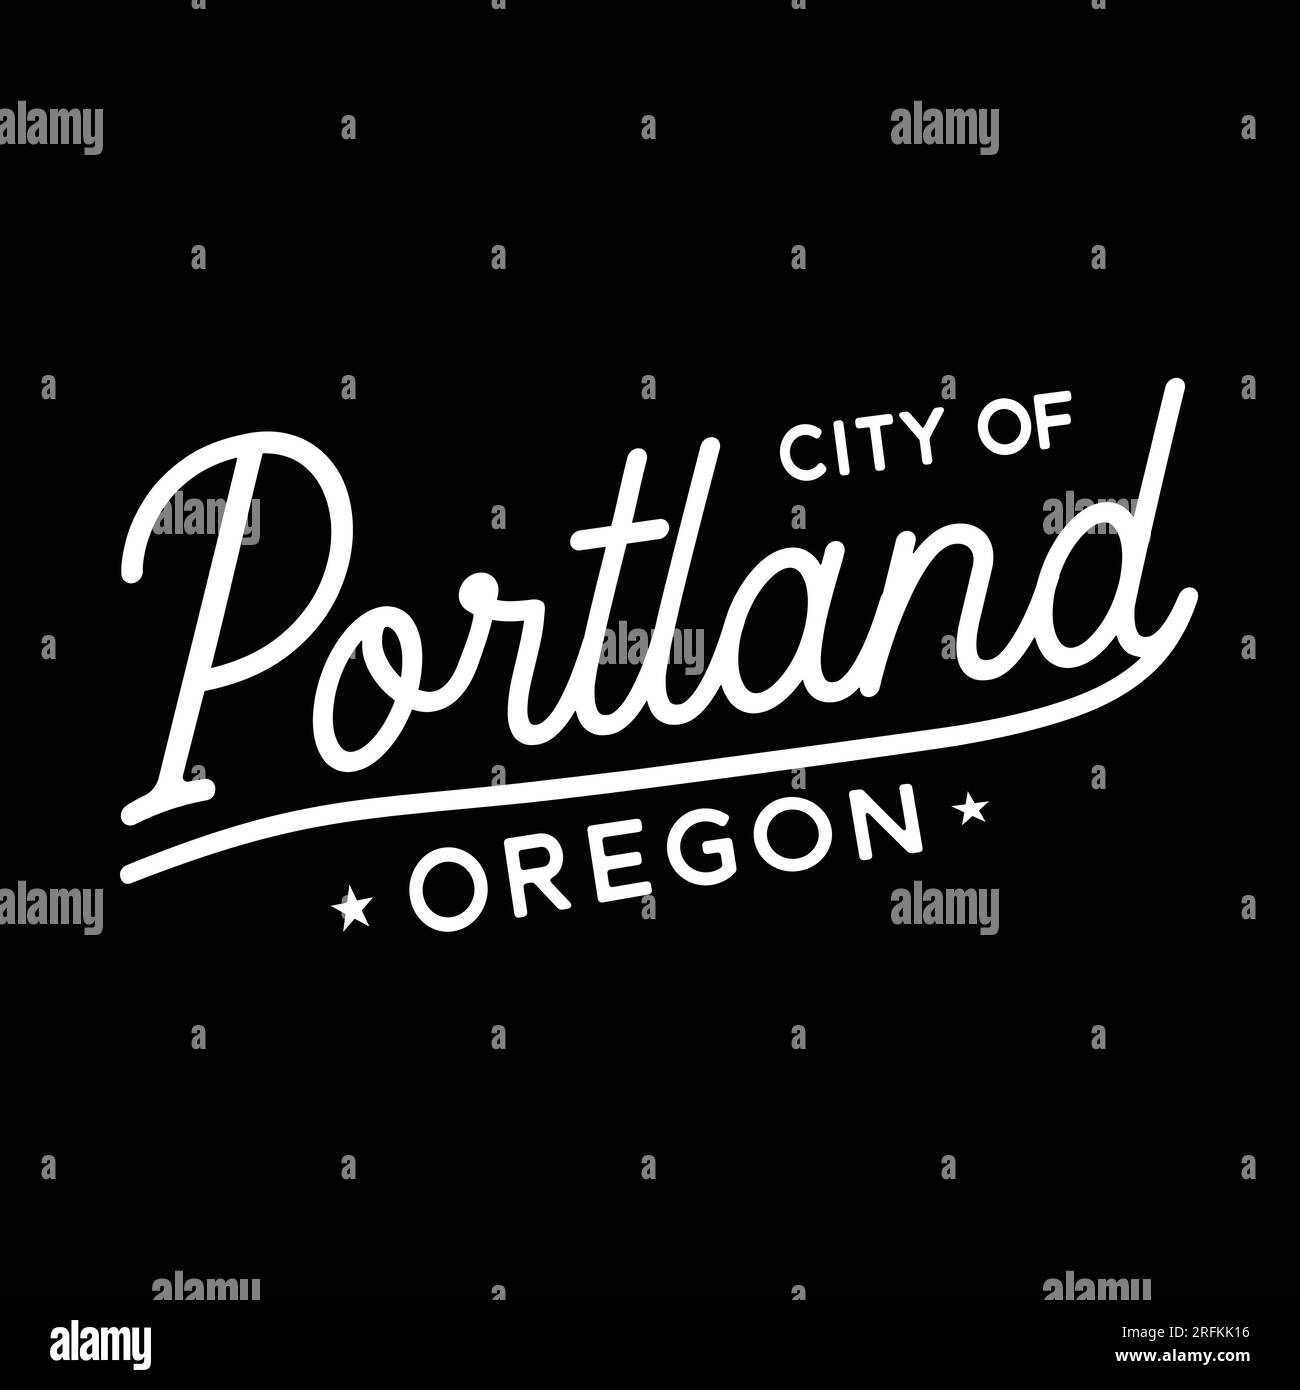 Conception de lettrage de la ville de Portland. Portland, Oregon conception typographique. Vecteur et illustration. Illustration de Vecteur